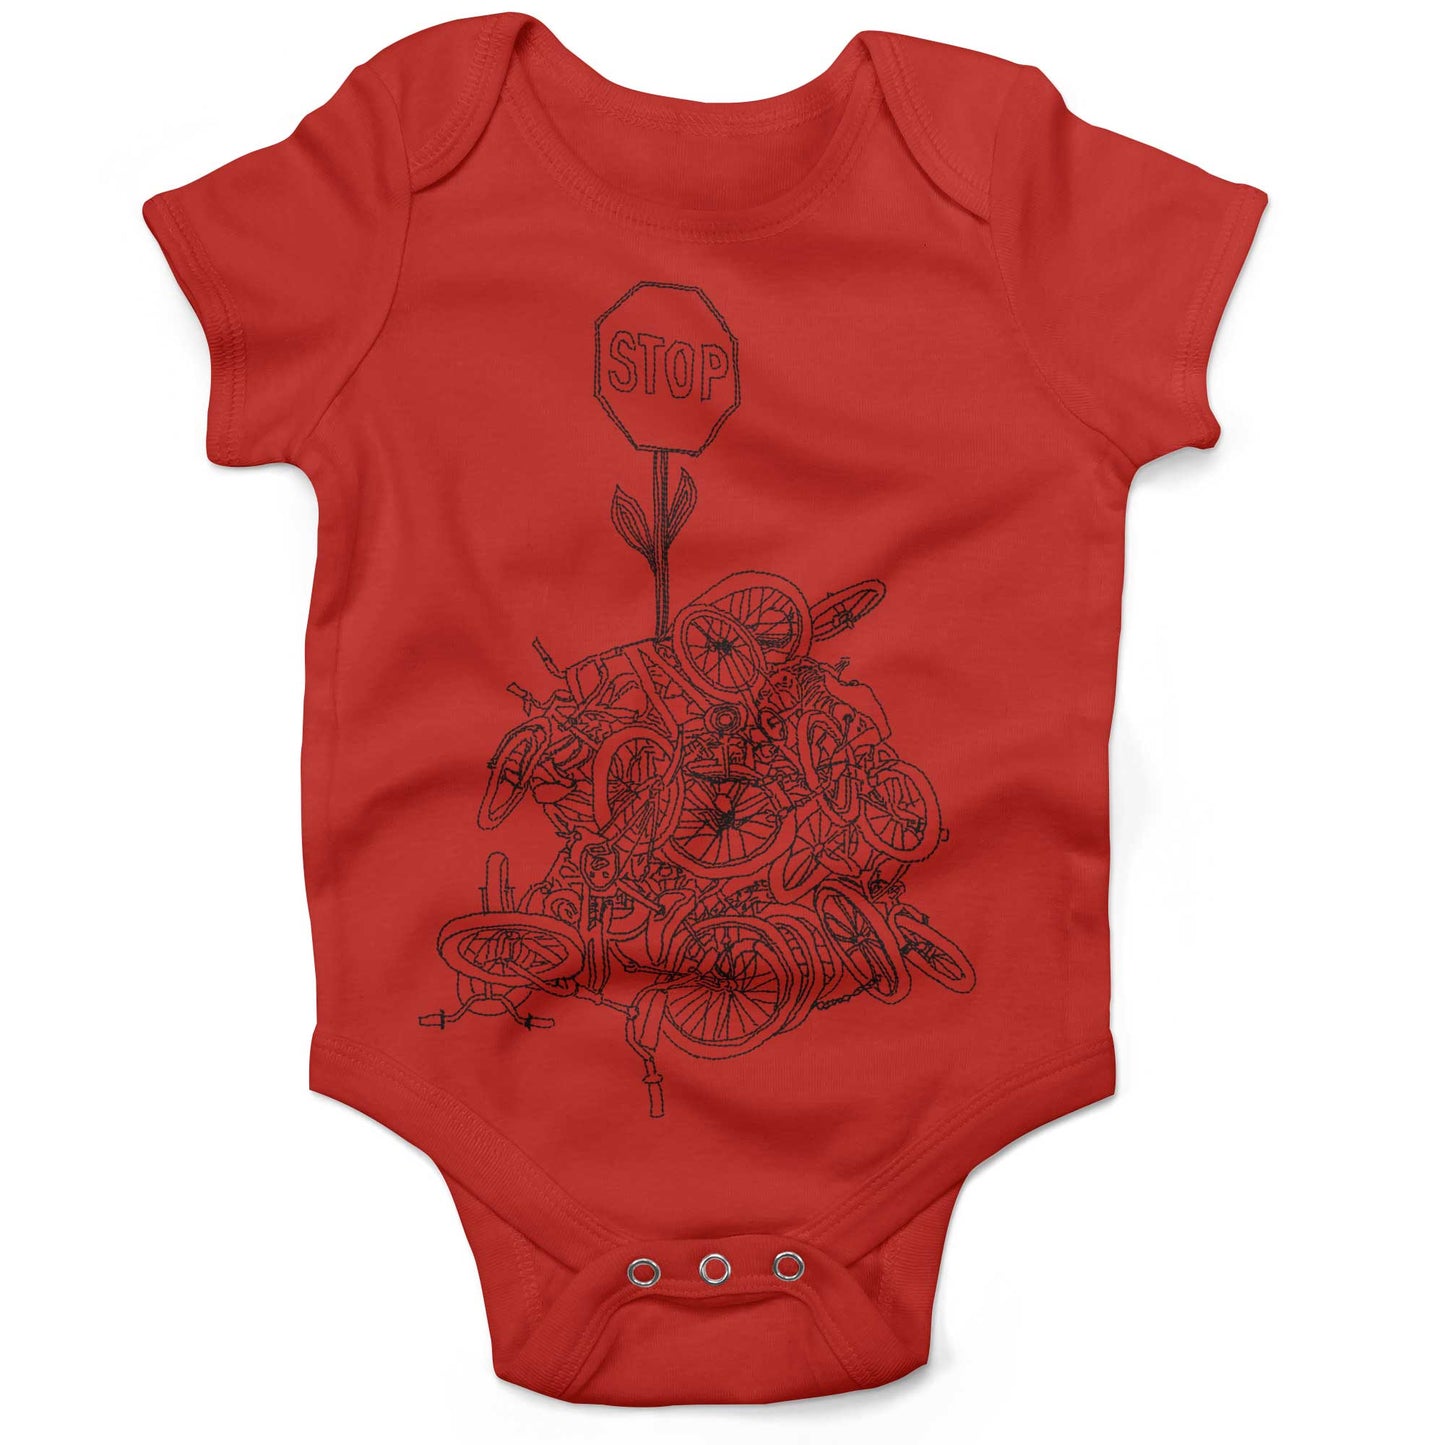 Zoobomber Bike Pyle Infant Bodysuit or Raglan Baby Tee-Organic Red-3-6 months